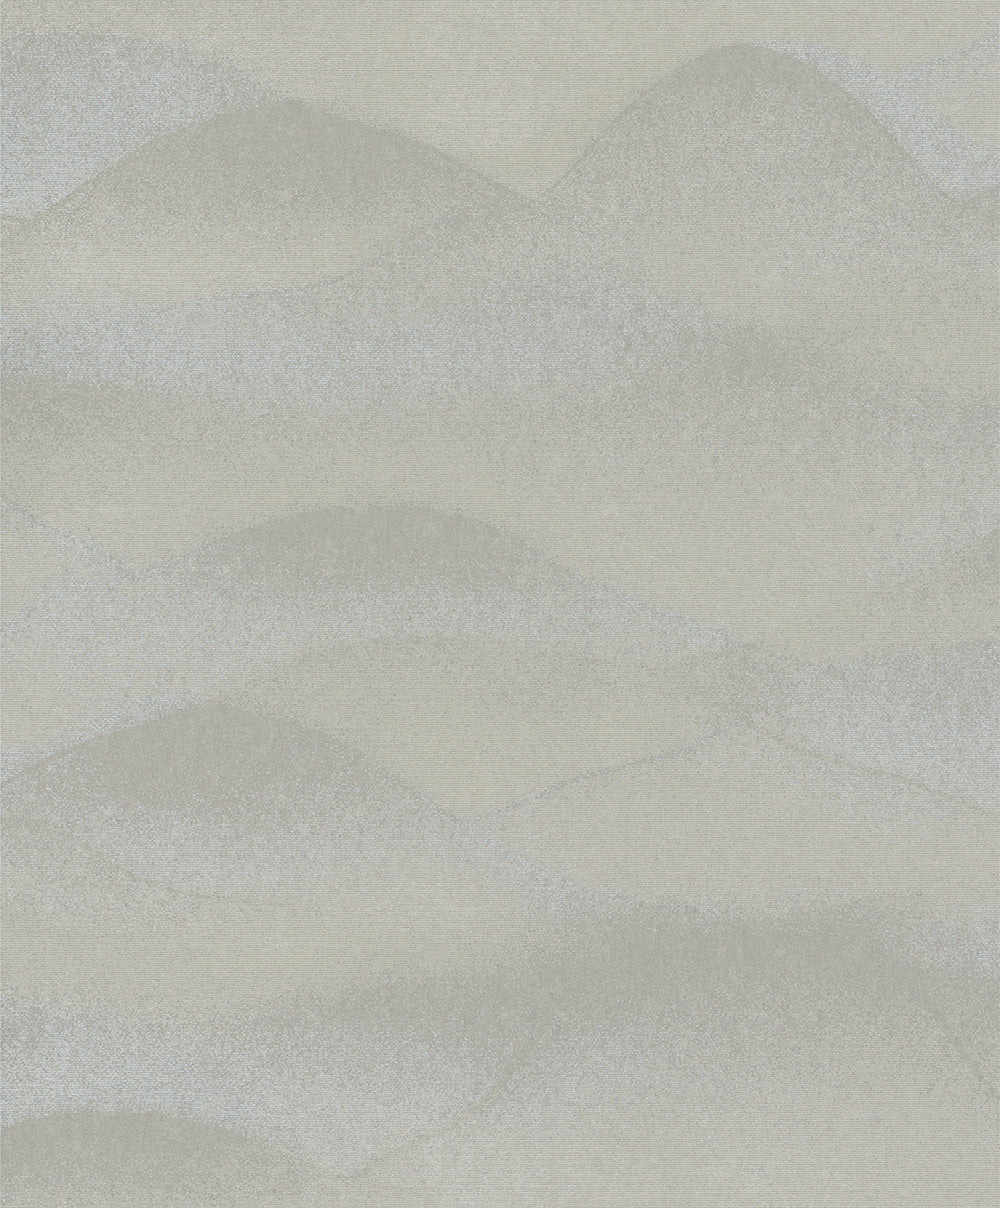 Habitat - Waves geometric wallpaper Marburg Roll Beige-Grey  34016